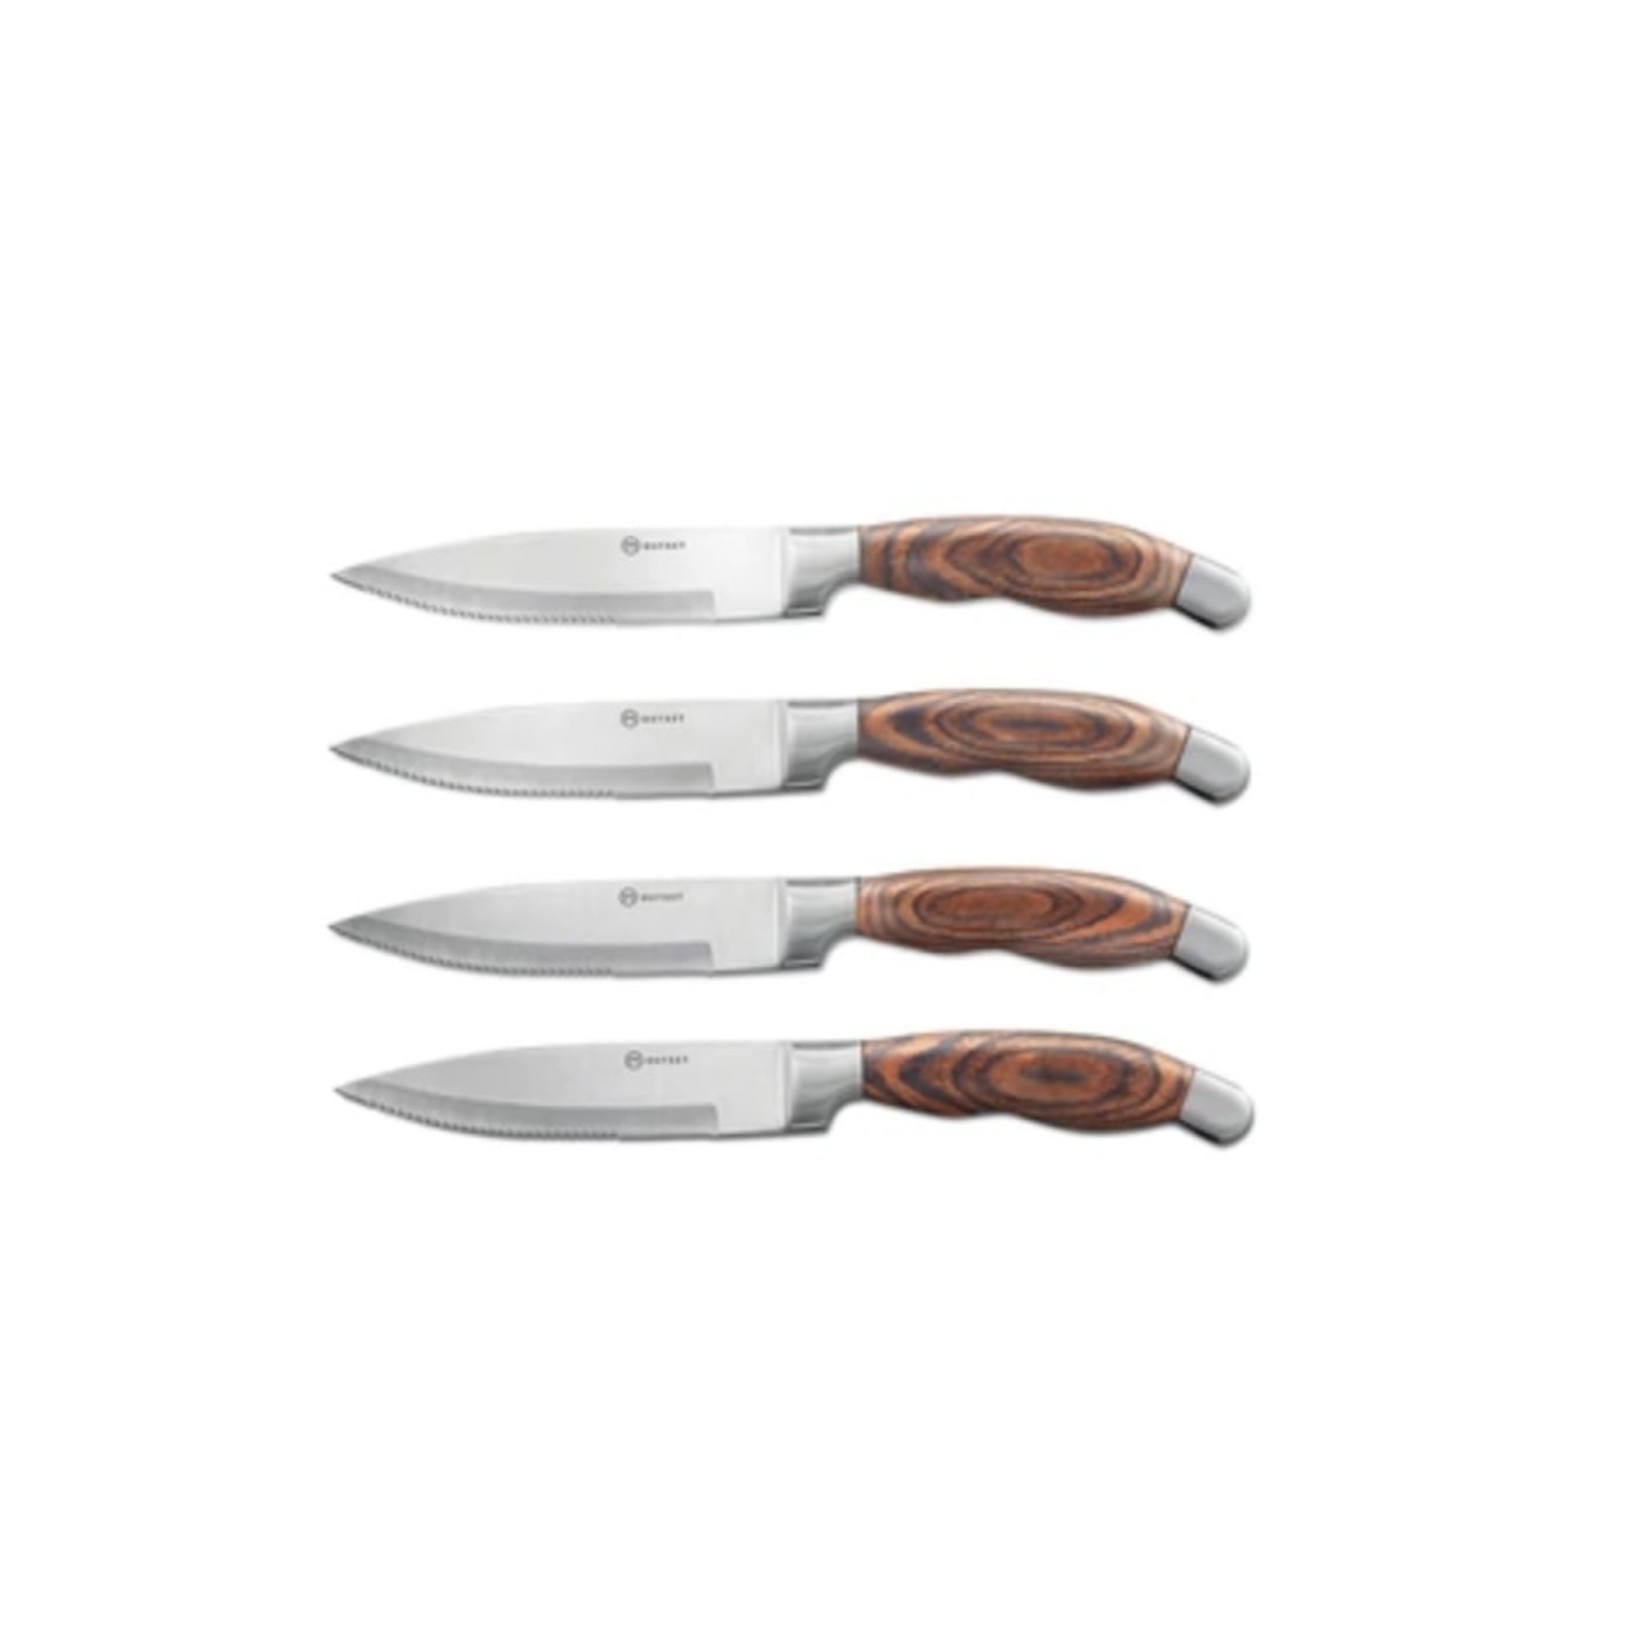 OUTSET OUTSET Steak Knives S/4